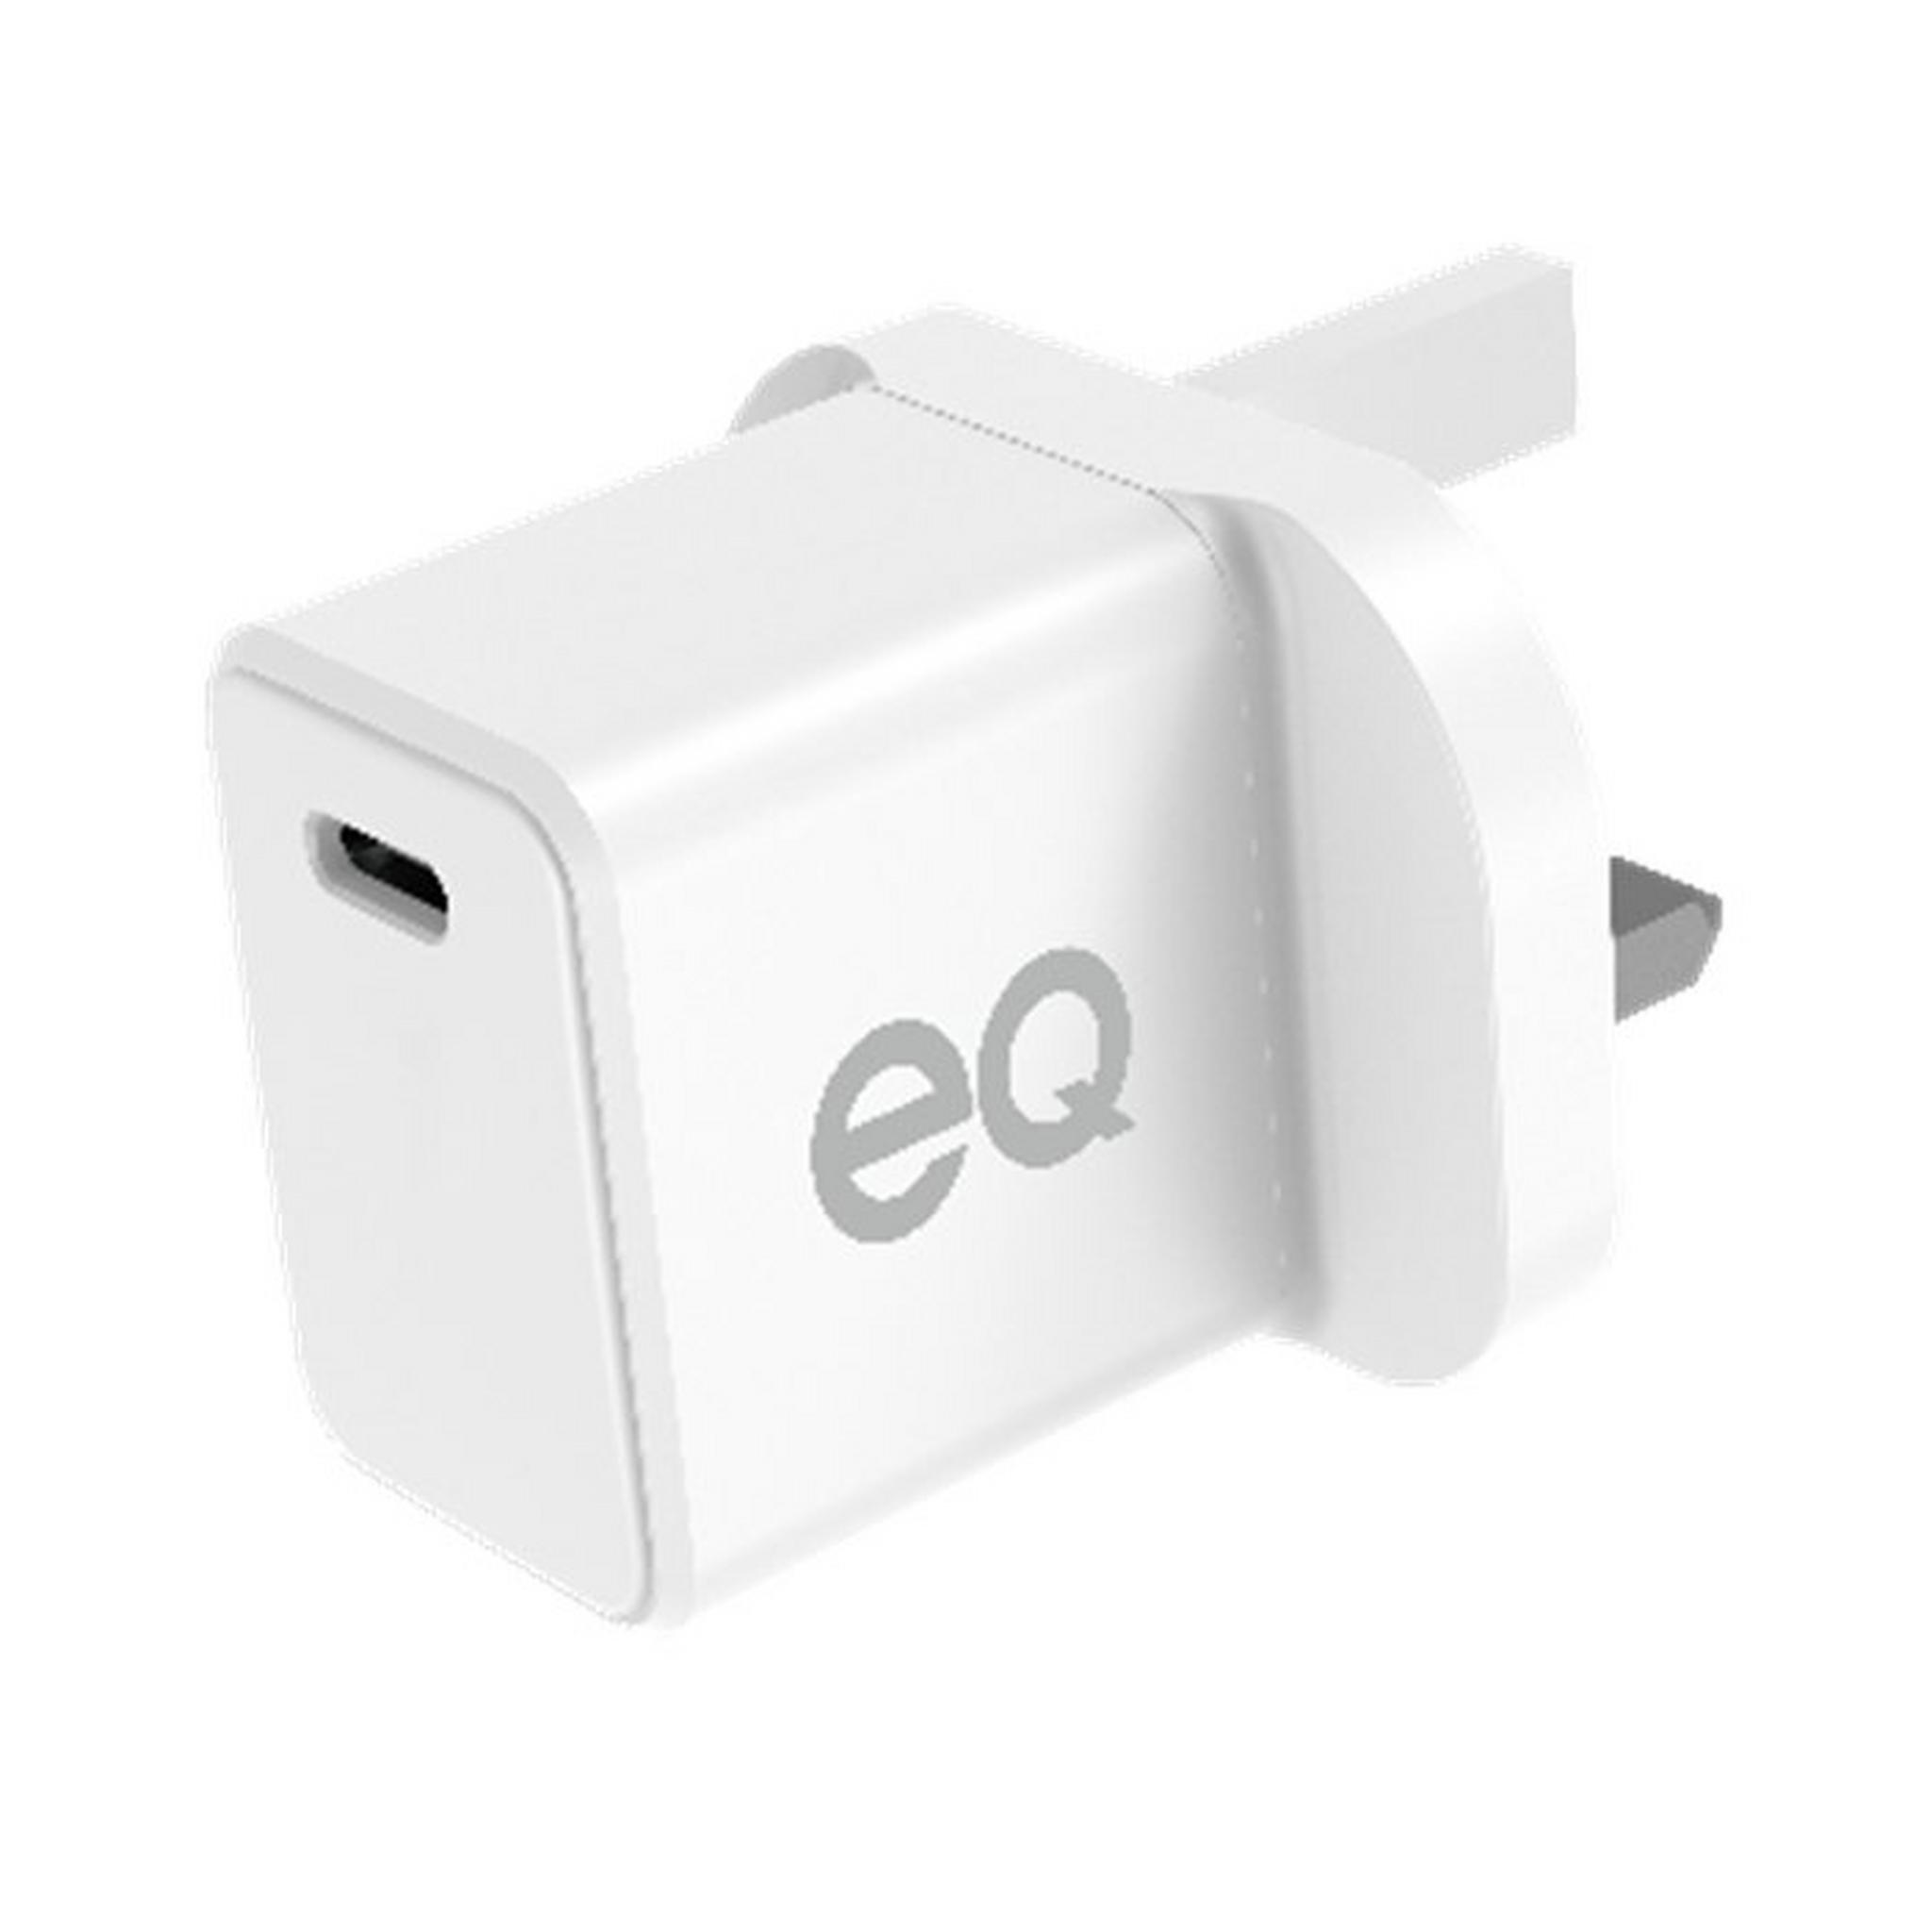 EQ USB-C Wall Charger, 20 W, VTX-20VH-3 – White